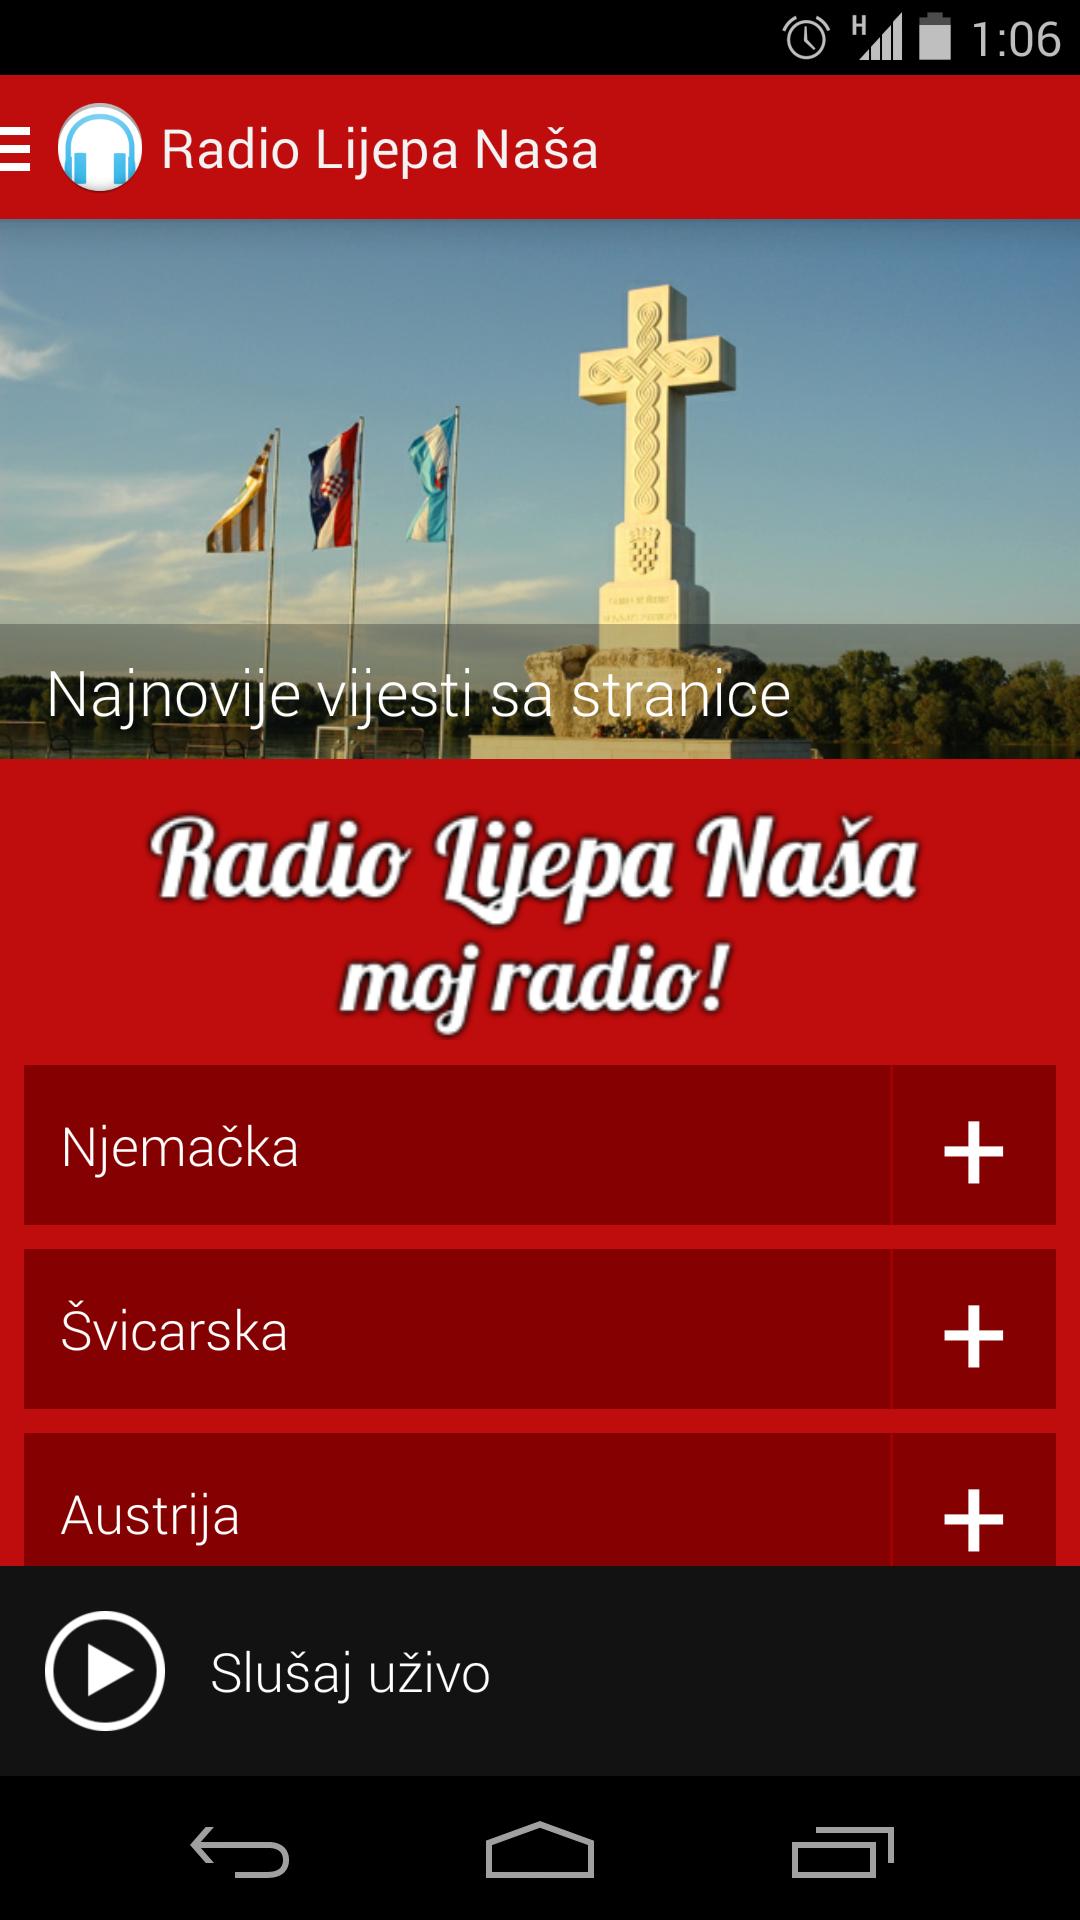 Radio Lijepa Naša for Android - APK Download